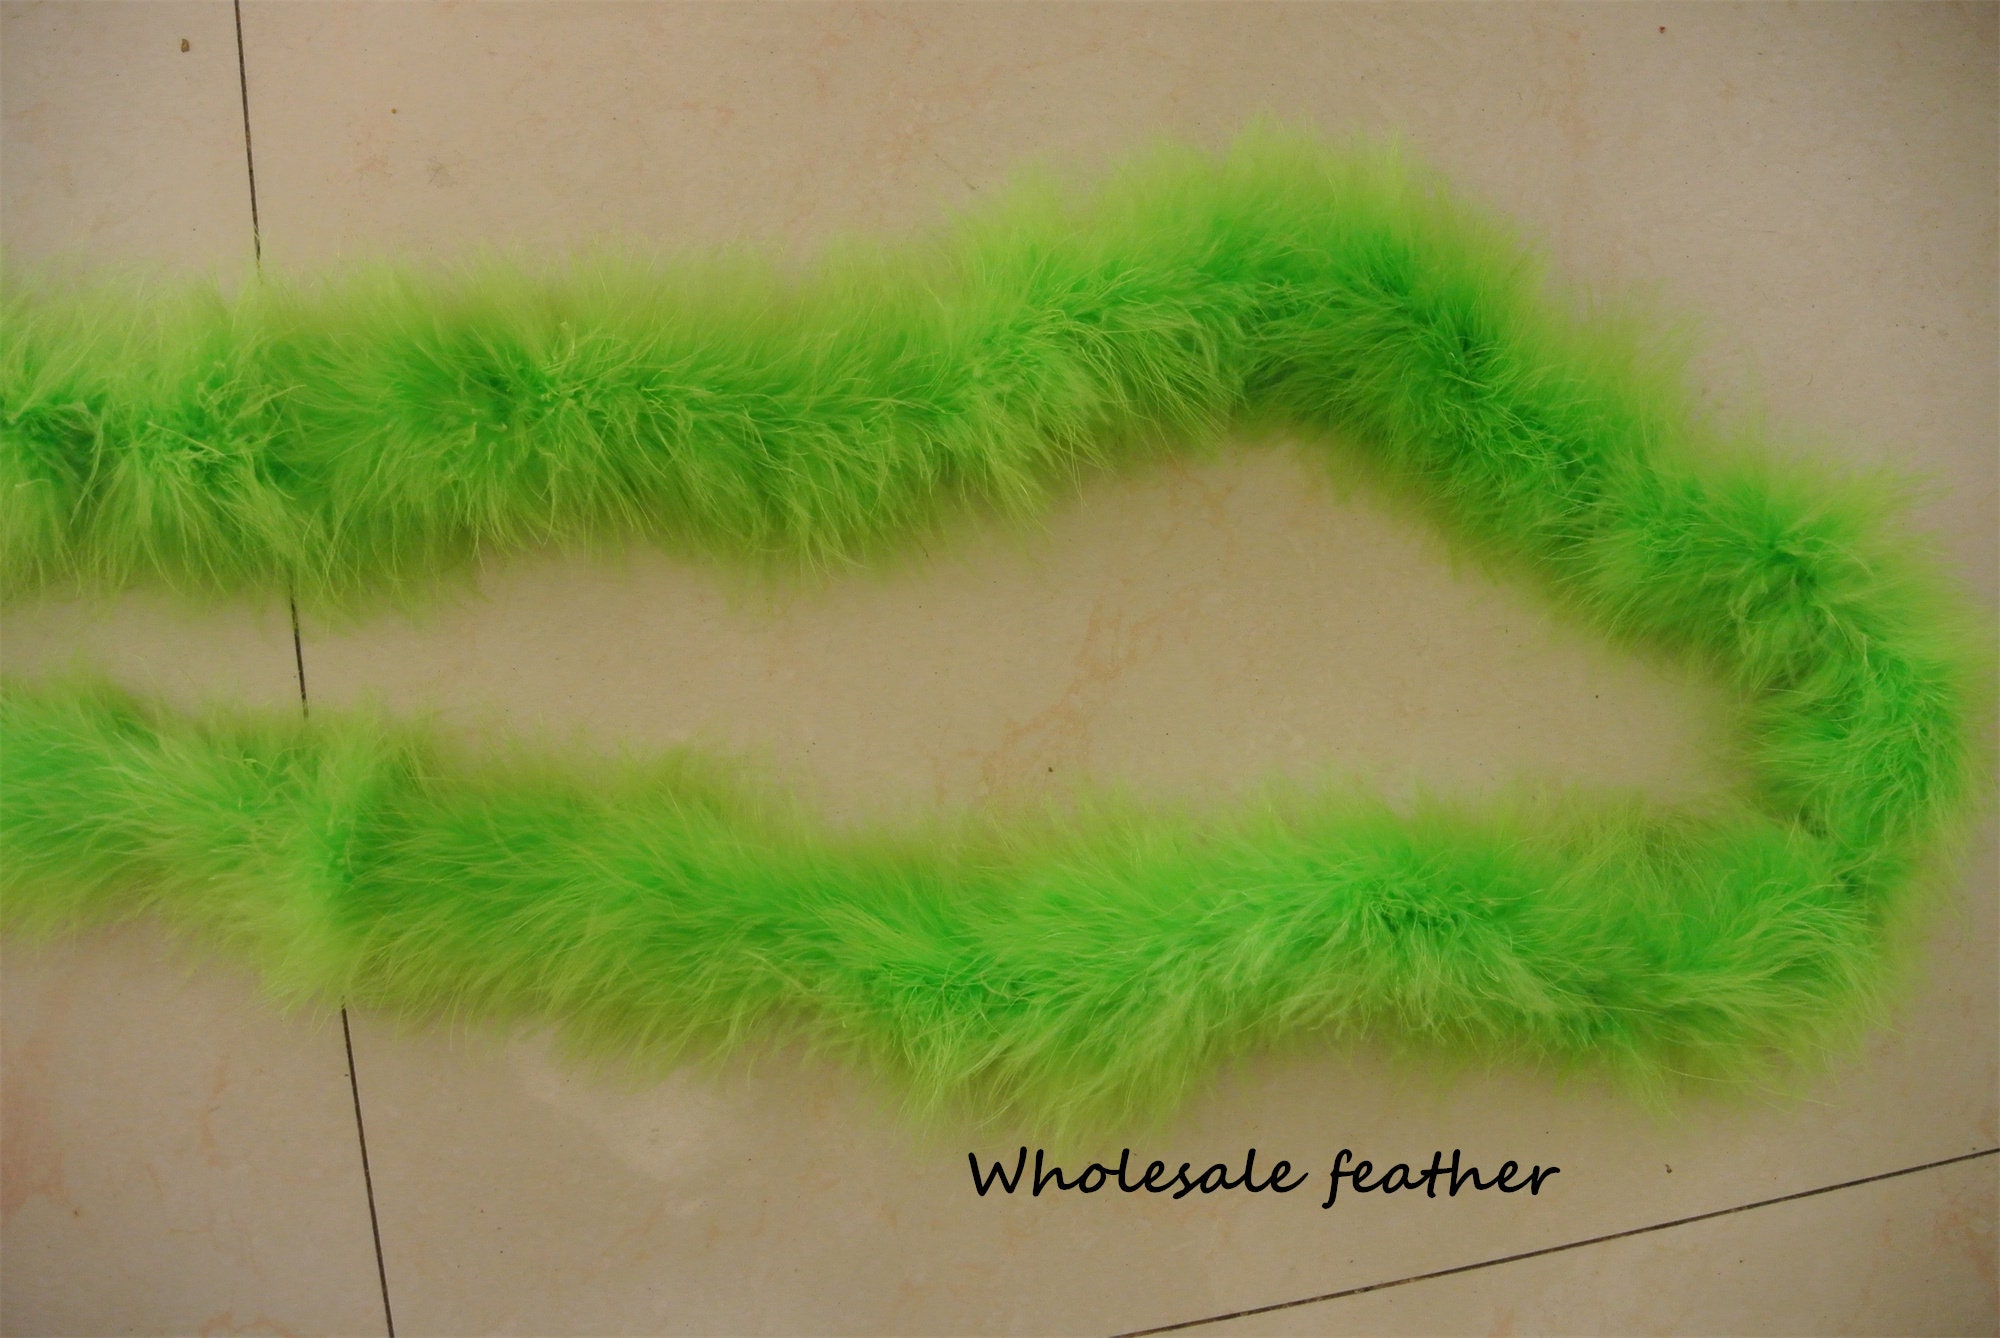 Ostrich Marabou Feather Boa - 18 Length - Lime Green